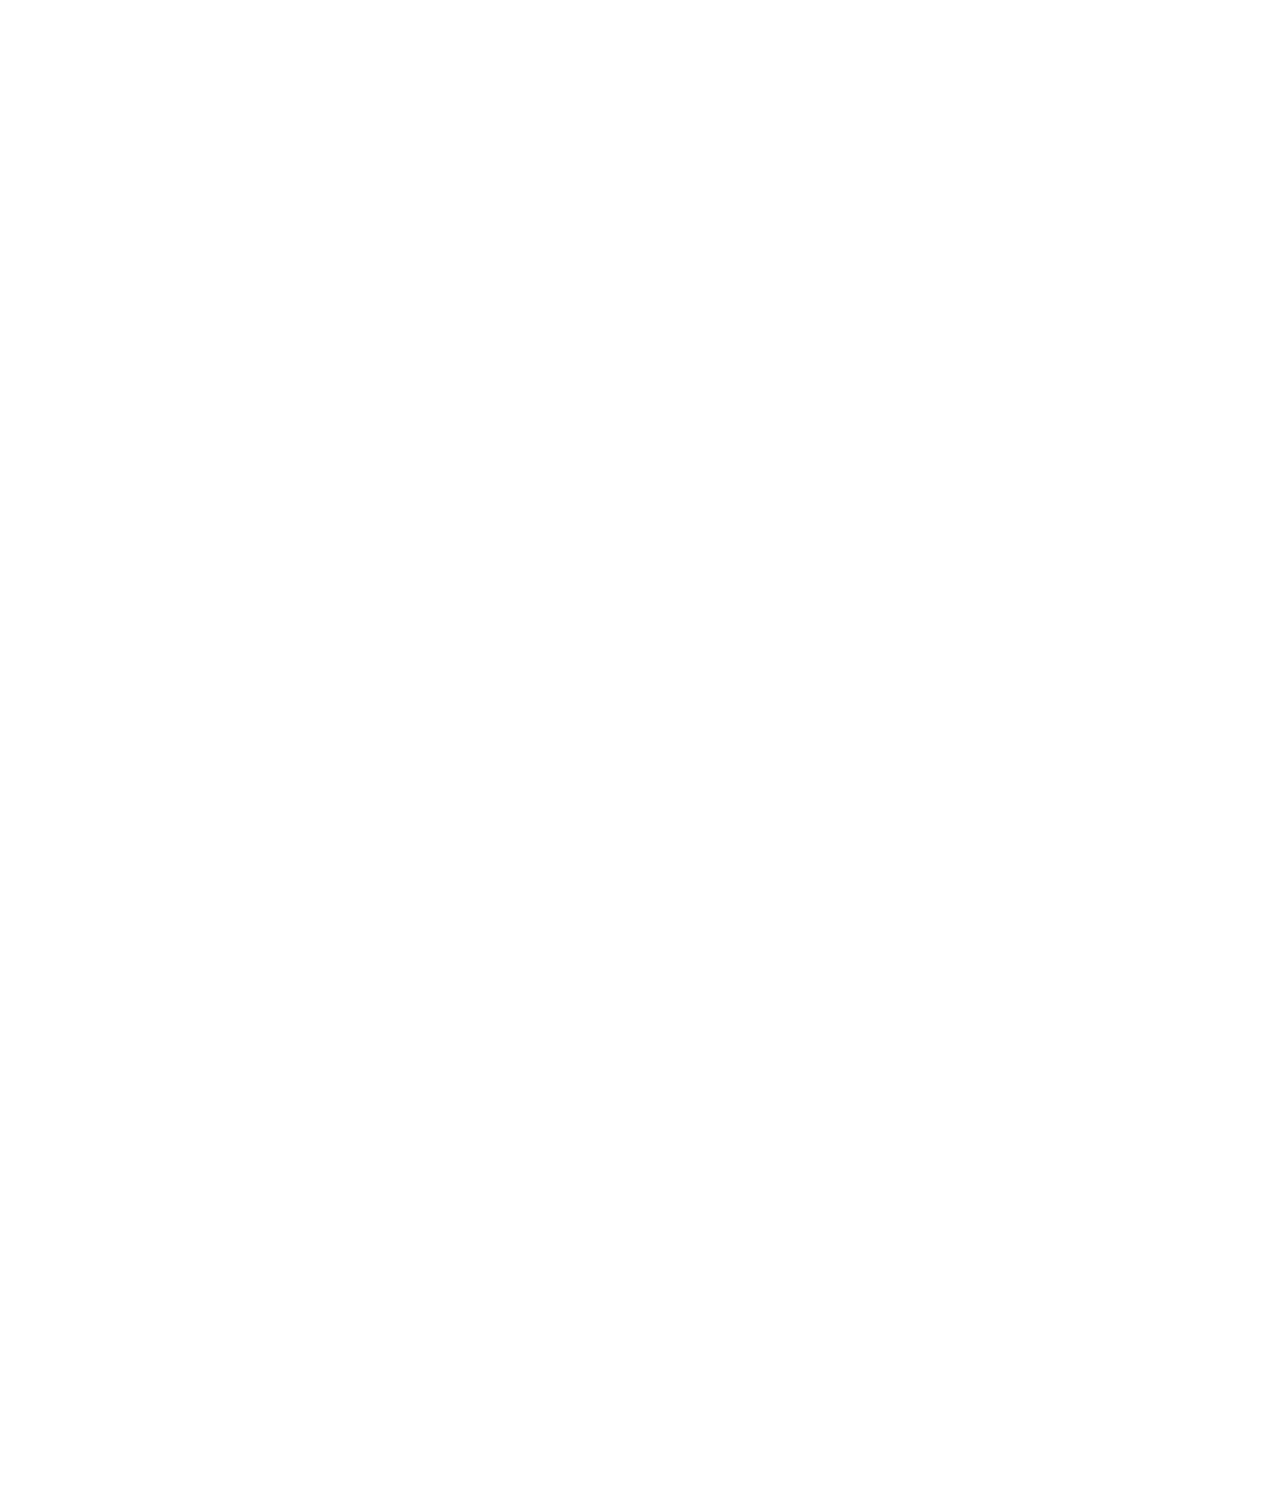 BNAC Research